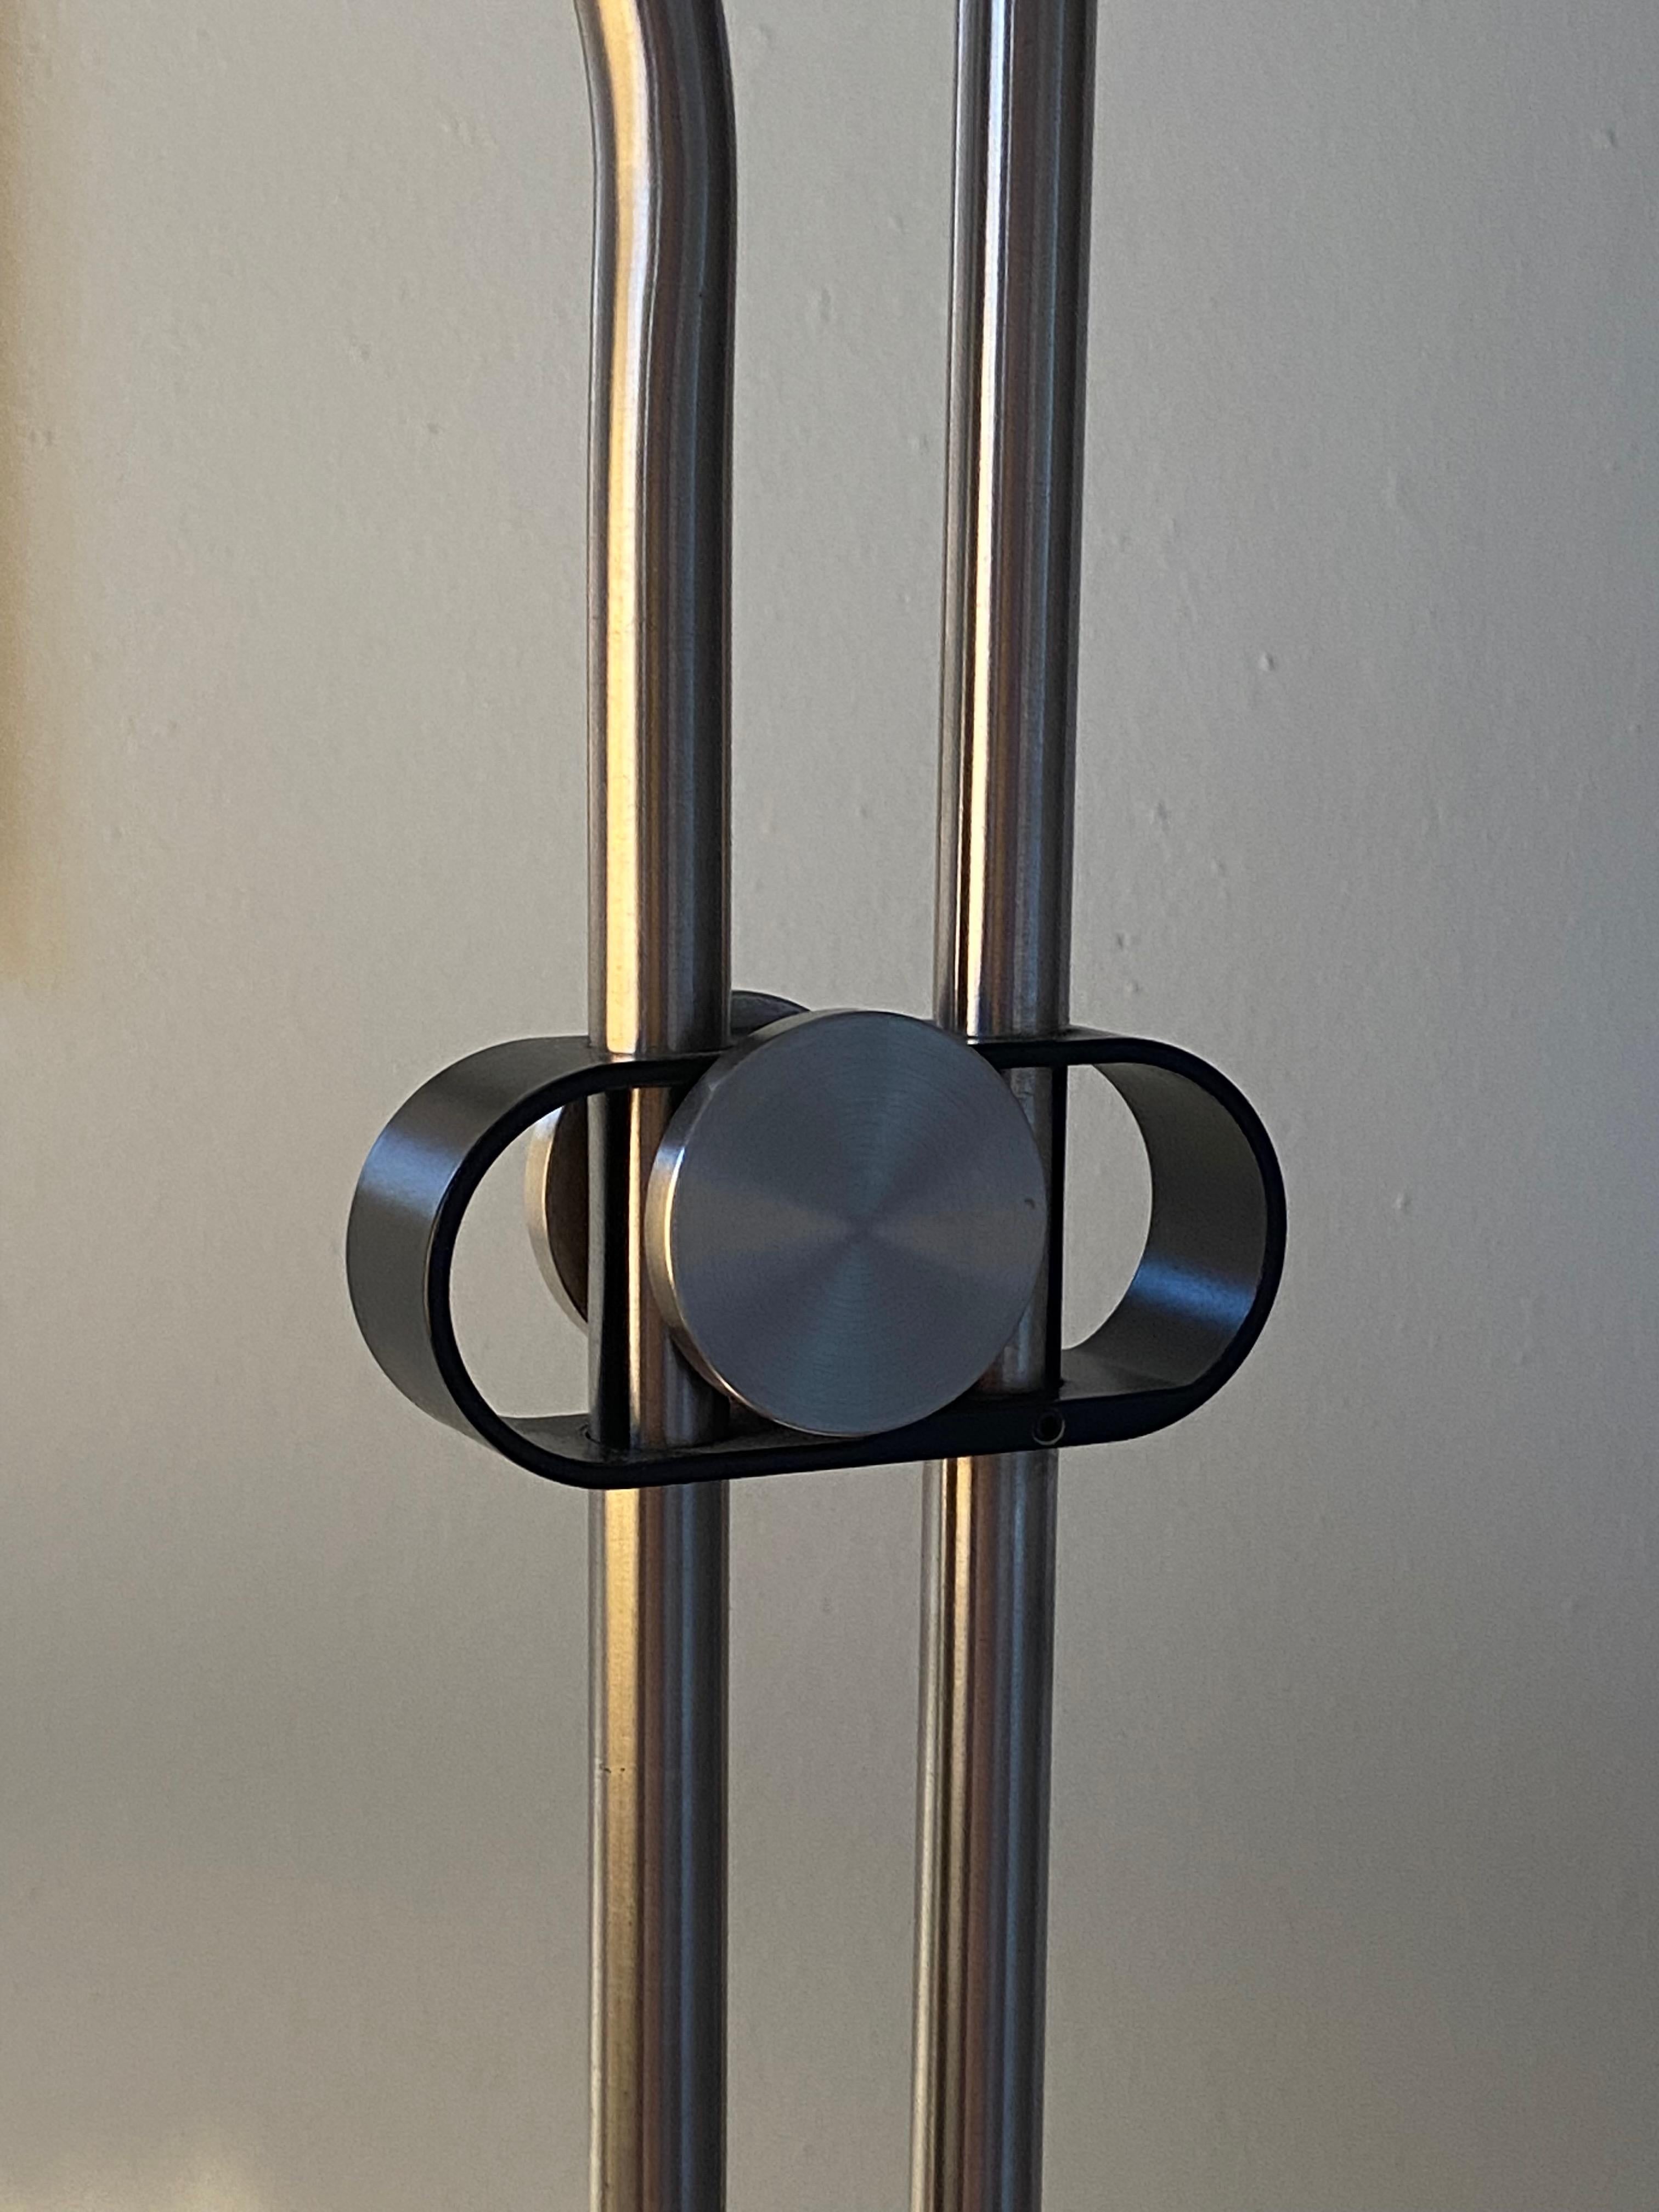 Barbizon School Leklint Table Lamp Mod. 320 Design by Michael Bang for Le Klint Denmark